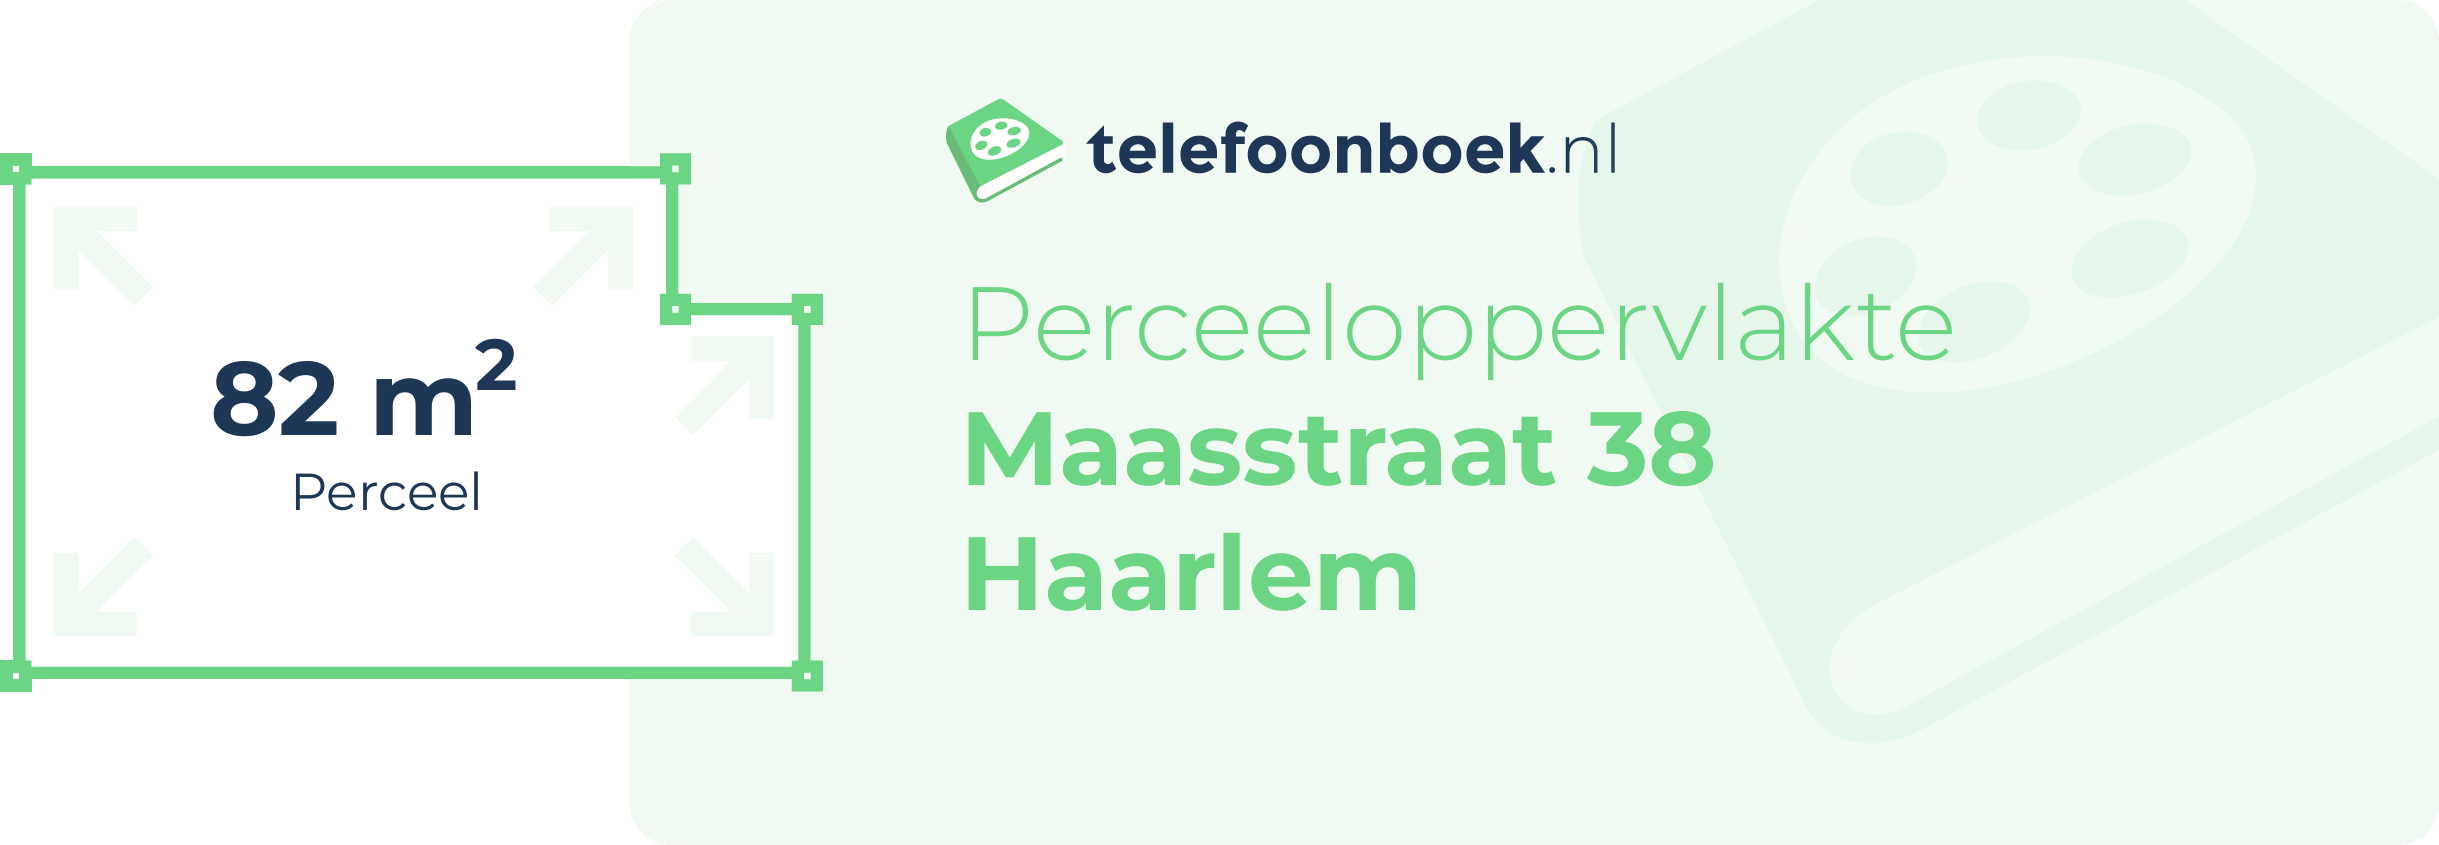 Perceeloppervlakte Maasstraat 38 Haarlem